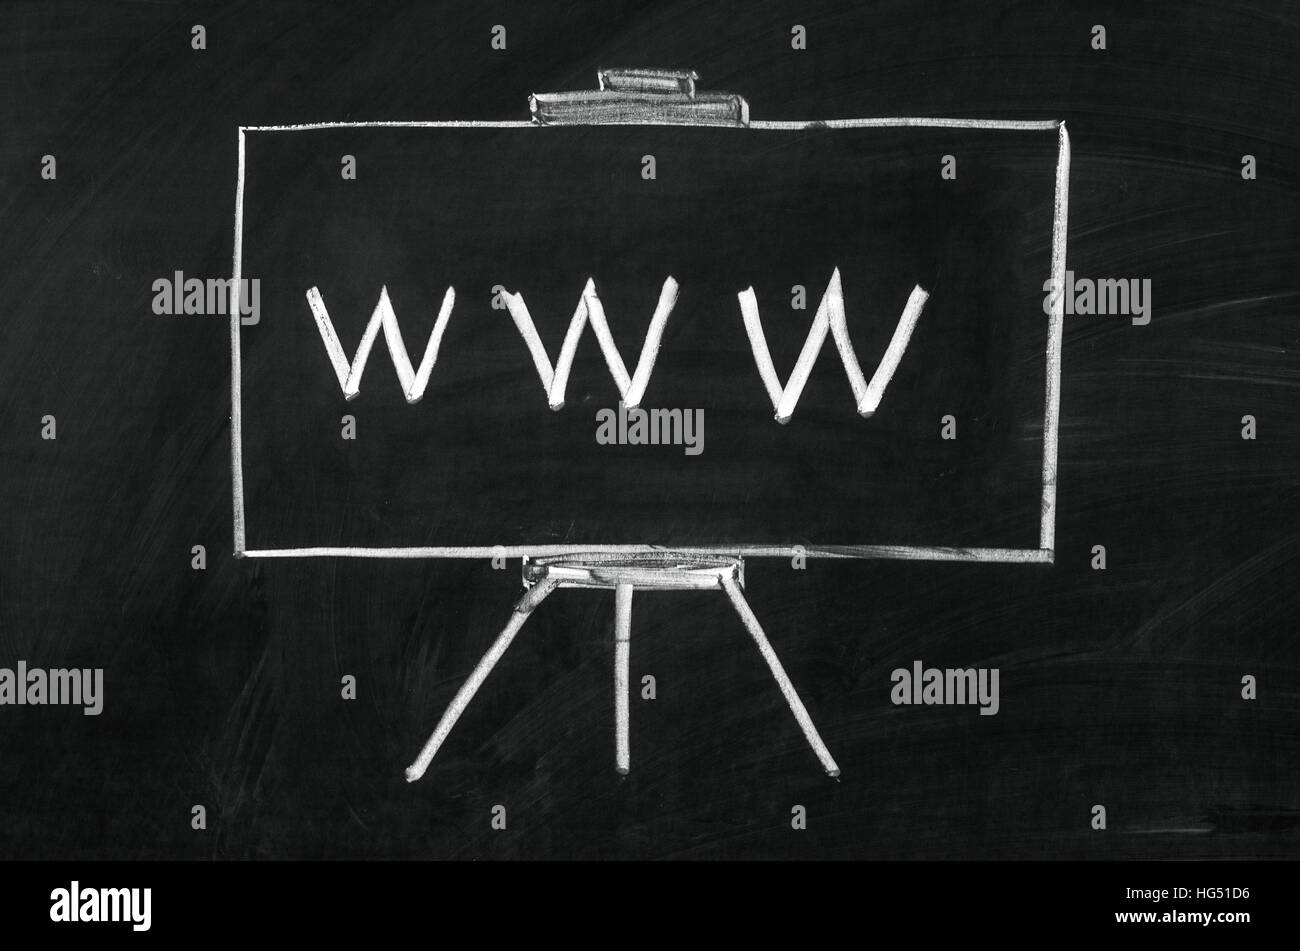 World wide web writed on blackboard with chalk Stock Photo